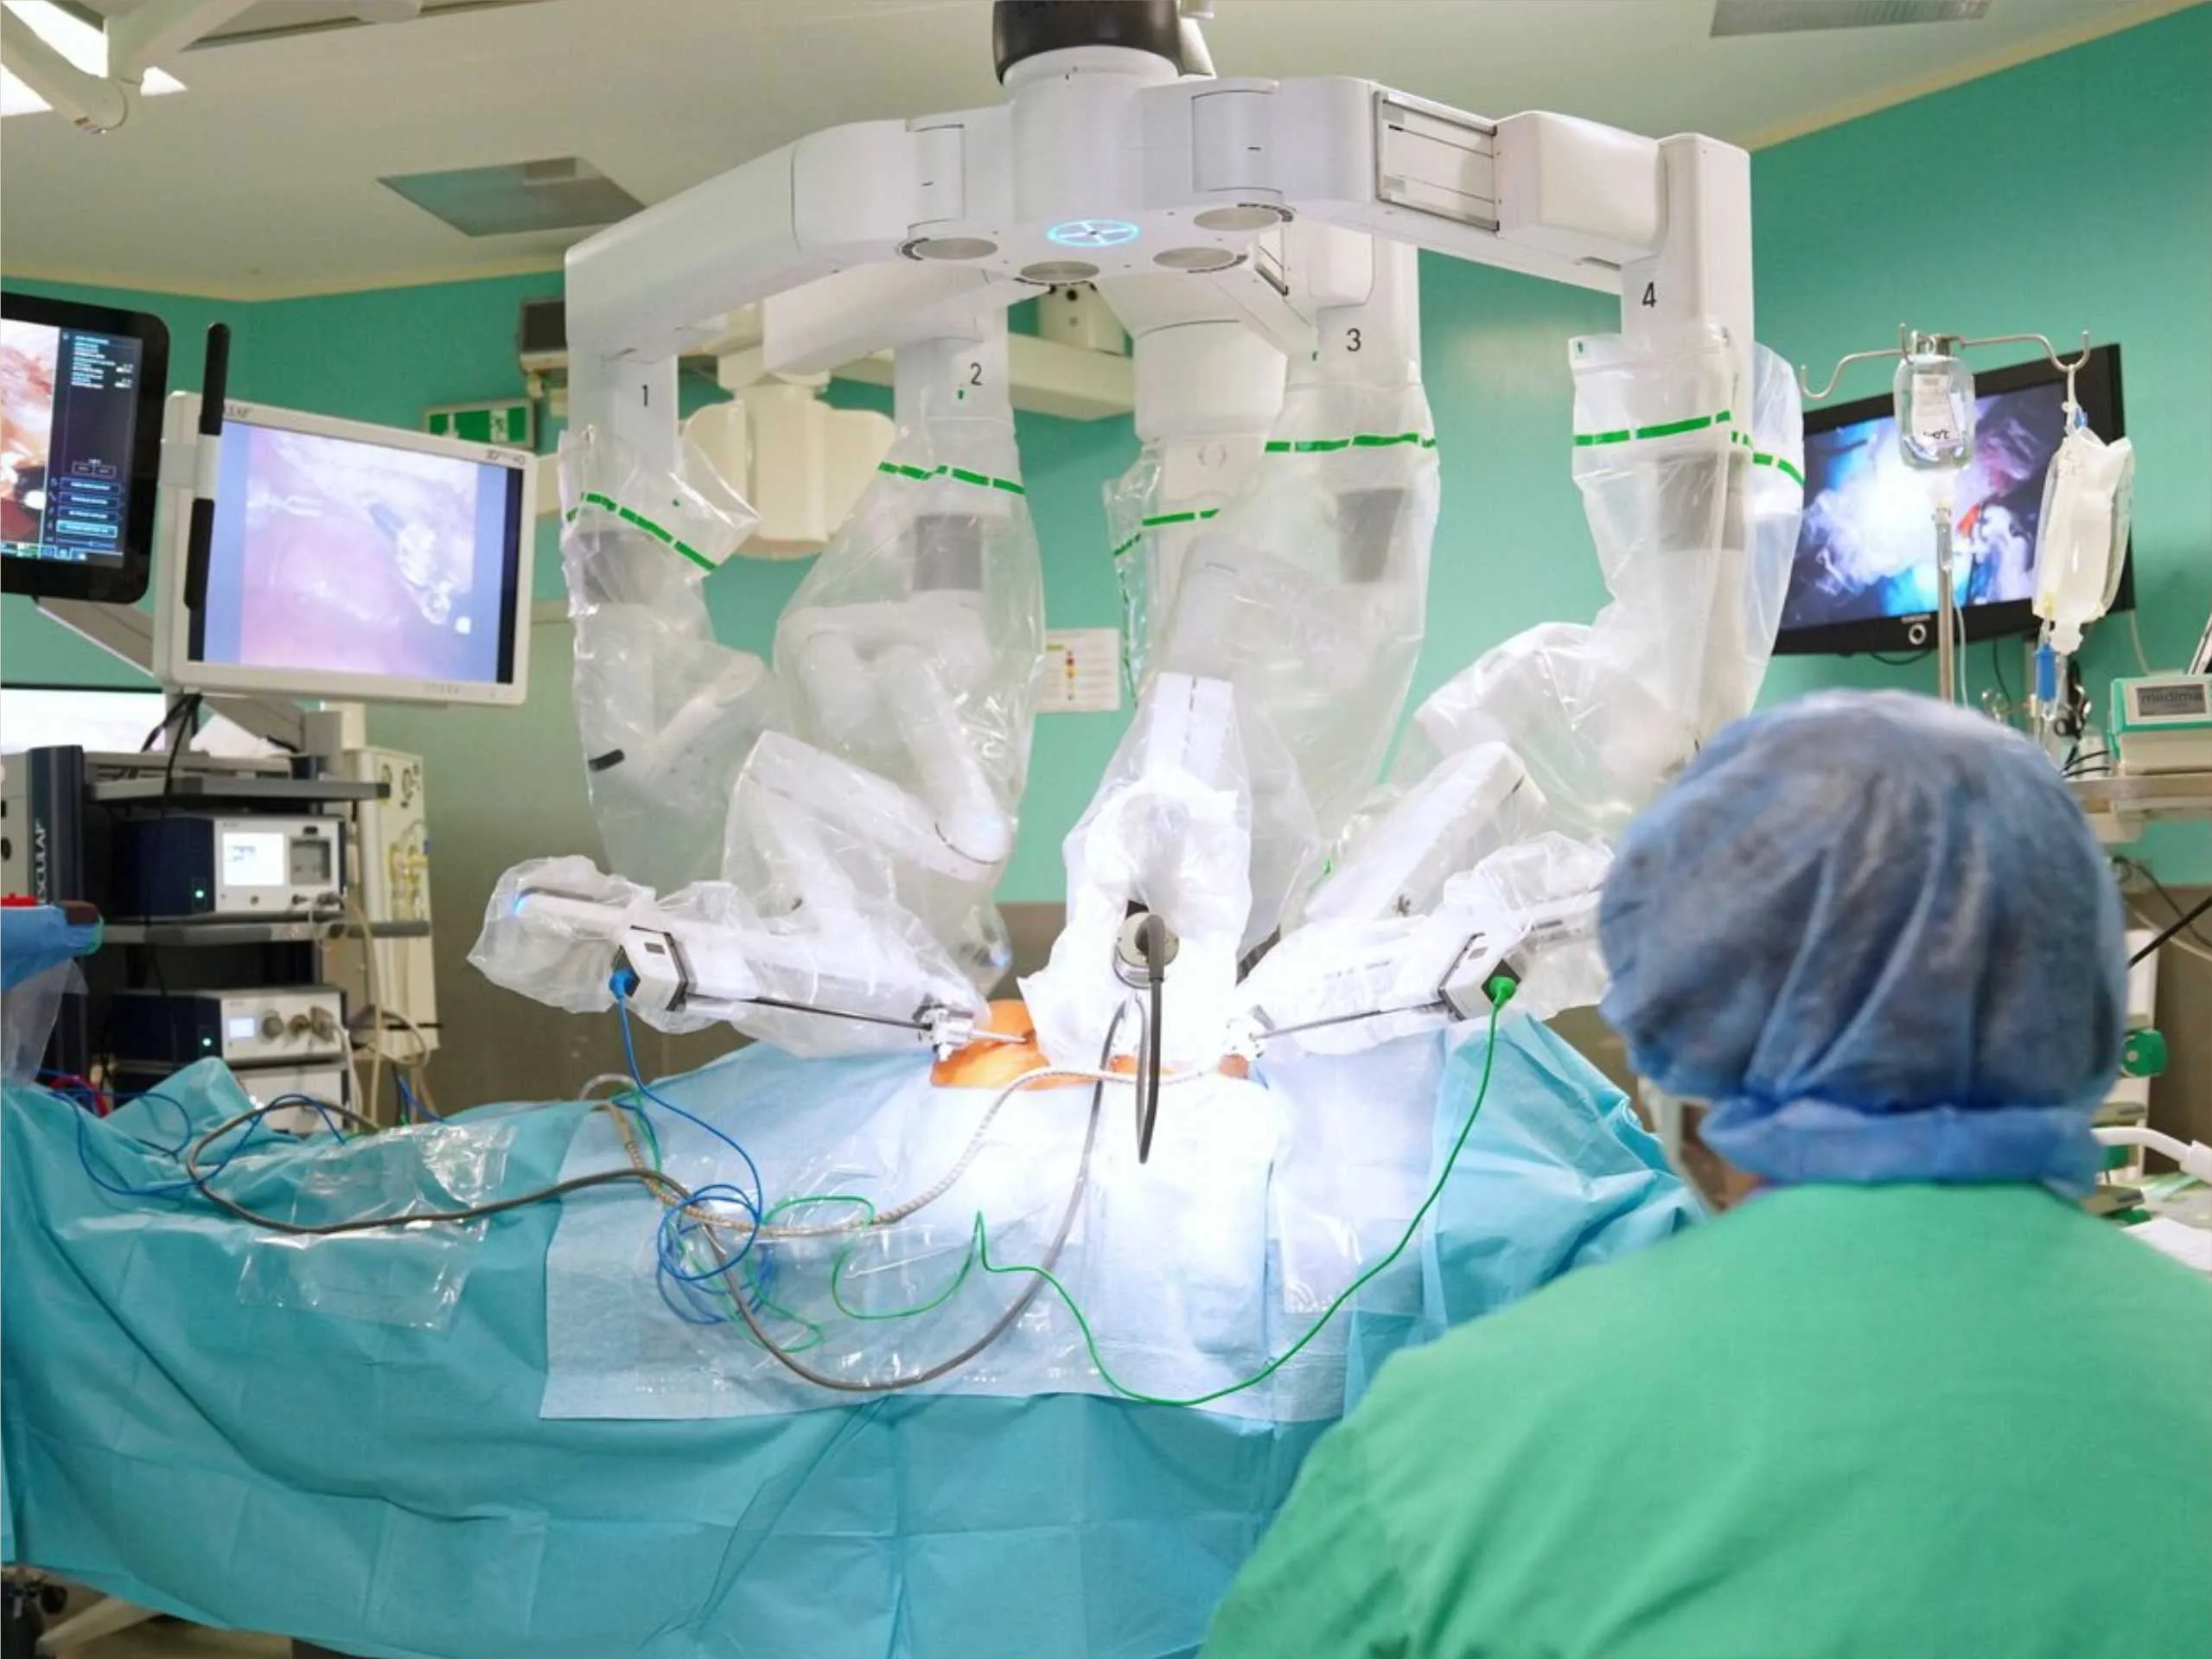 robots doing surgery